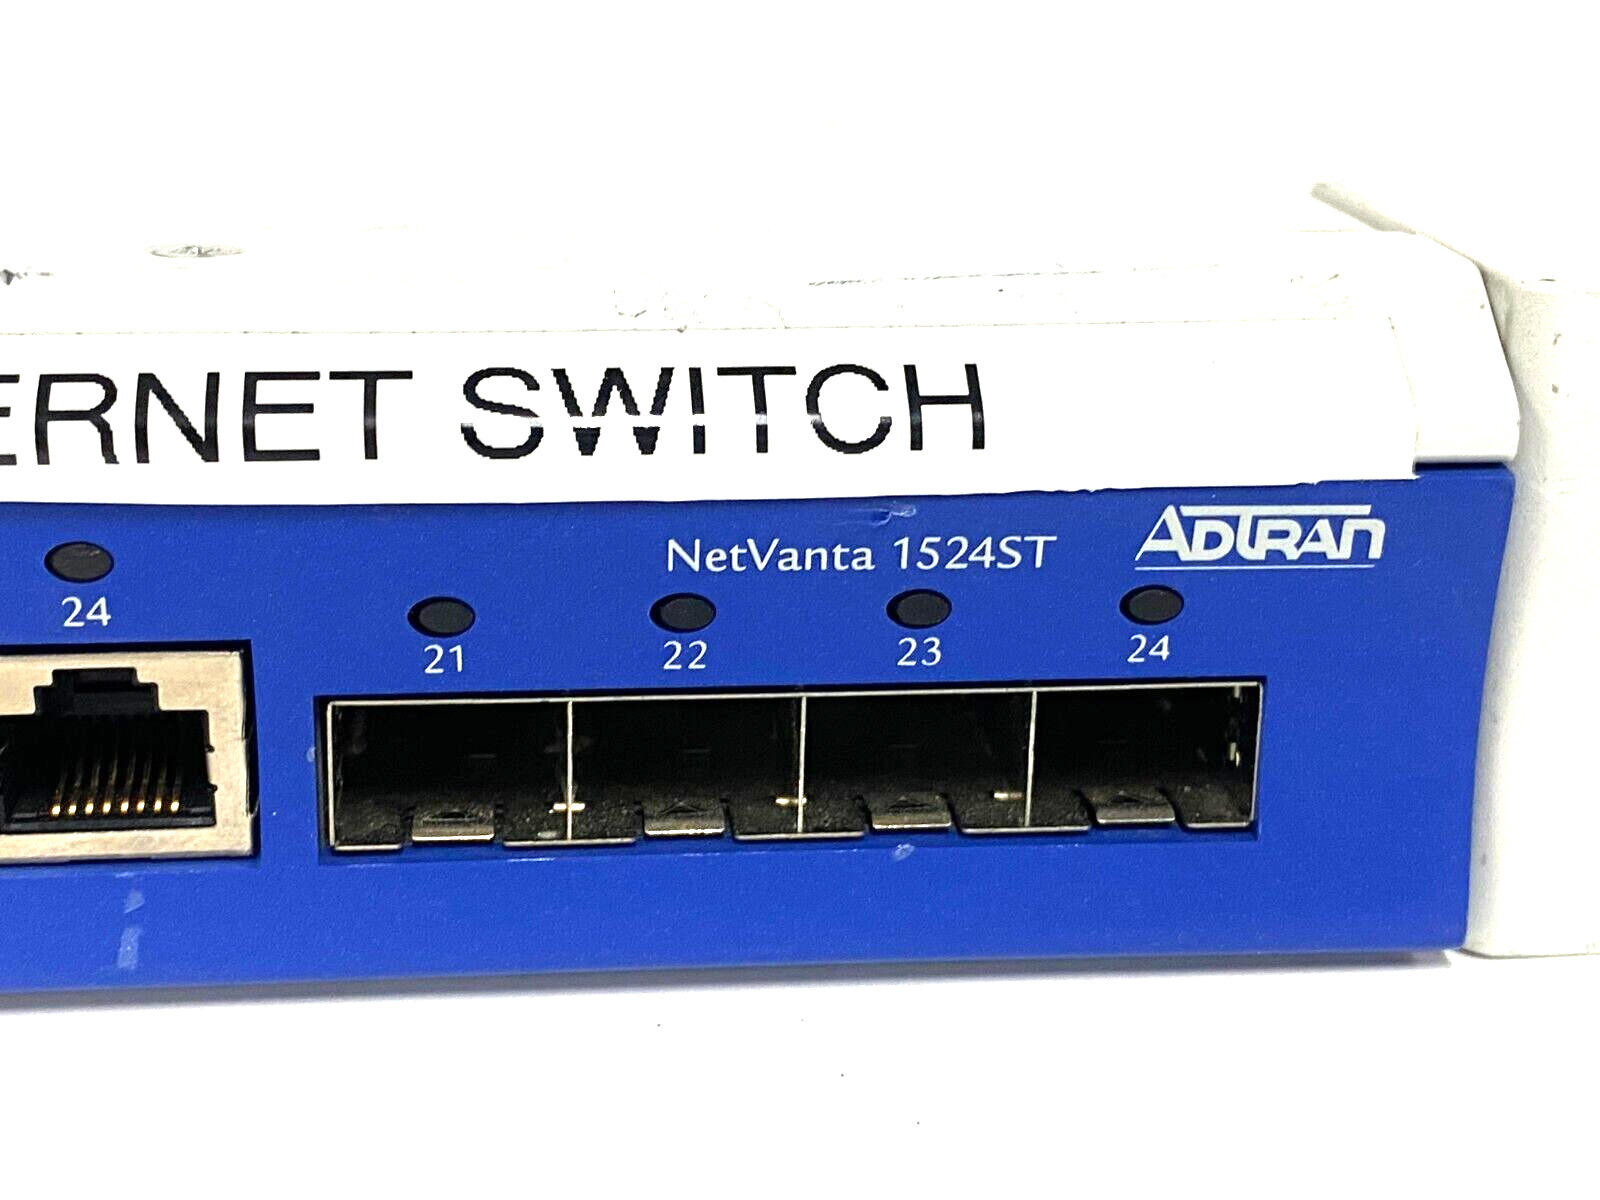 ADTRAN NetVanta 1524ST  24-Port power cable included